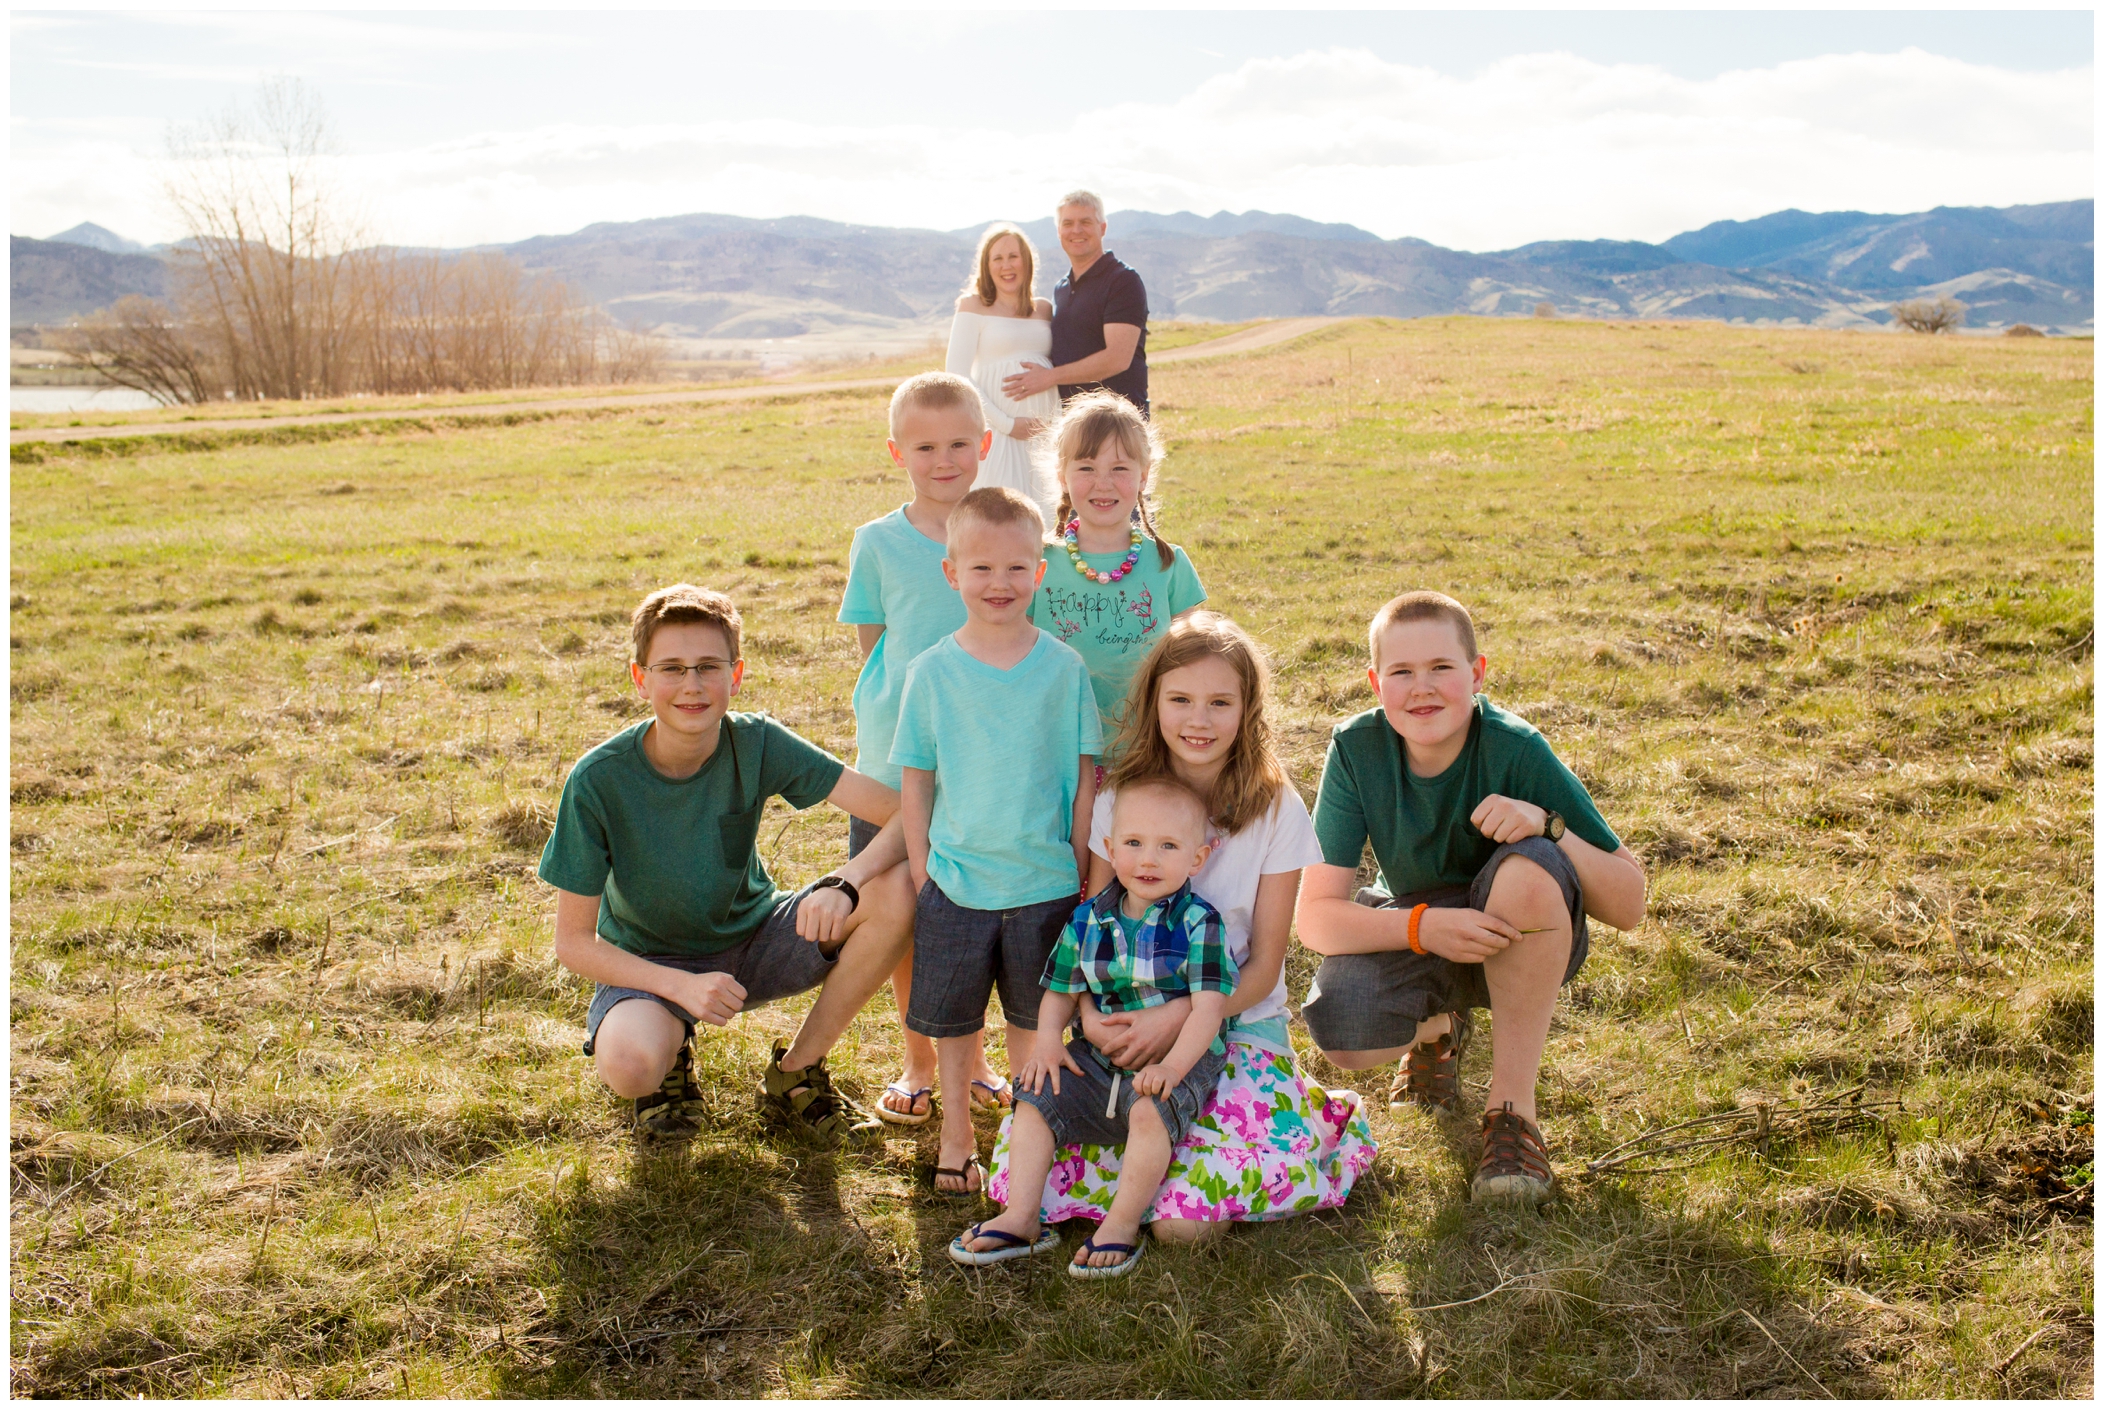 Colorado family photography inspiration